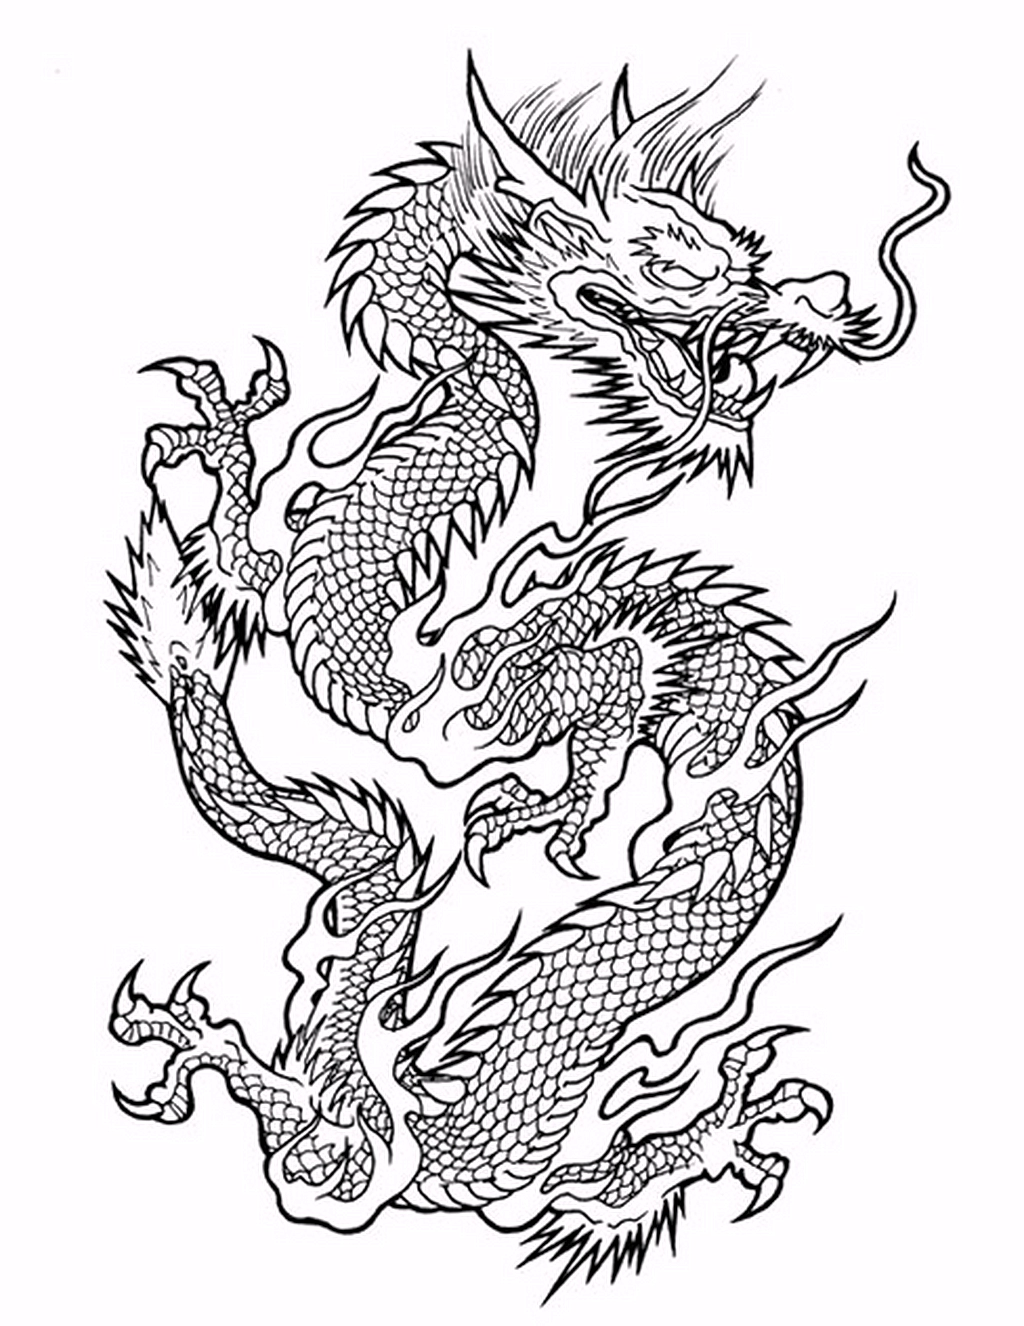 Dragon graphics. Китайский дракон лун Ван. Дракон Сюаньлун тату. Китайский дракон эскиз. Дракон тату эскиз.